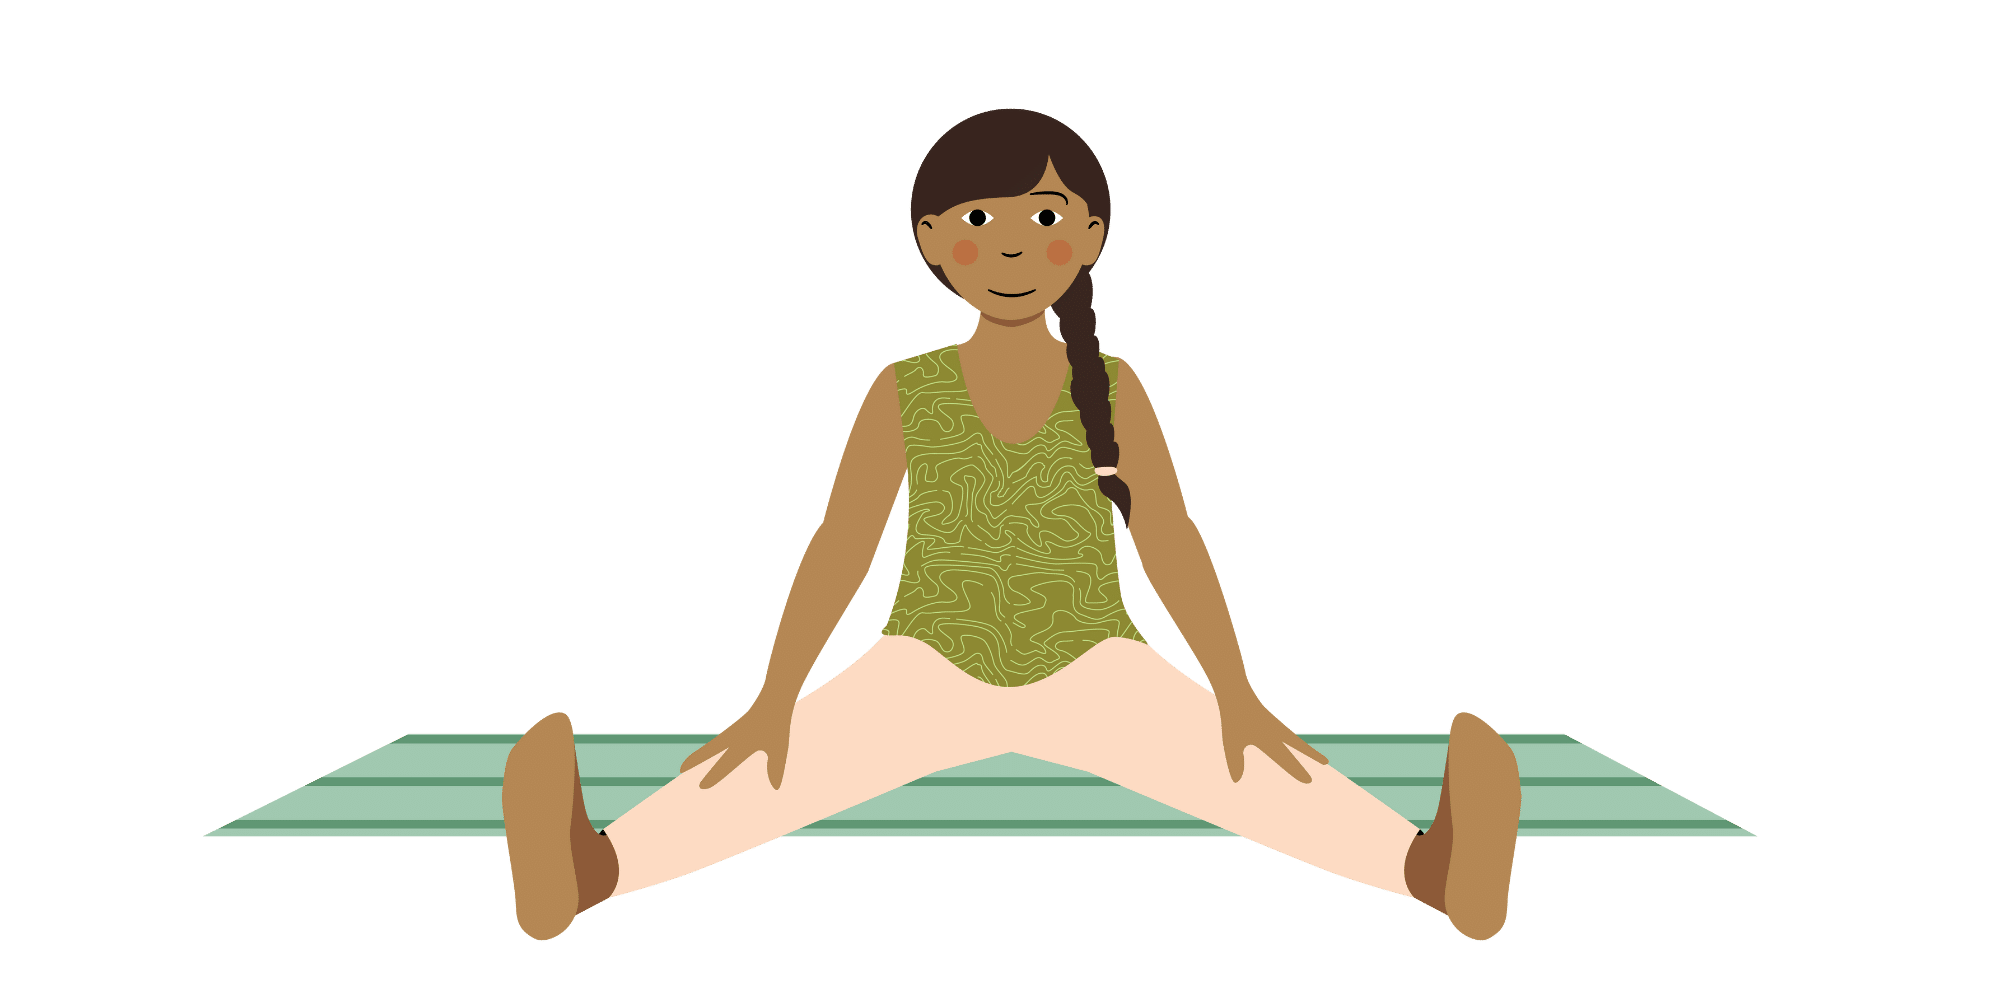 Kids Yoga | Fun with Downward Dog 🐶| Child's Pose Yoga - YouTube